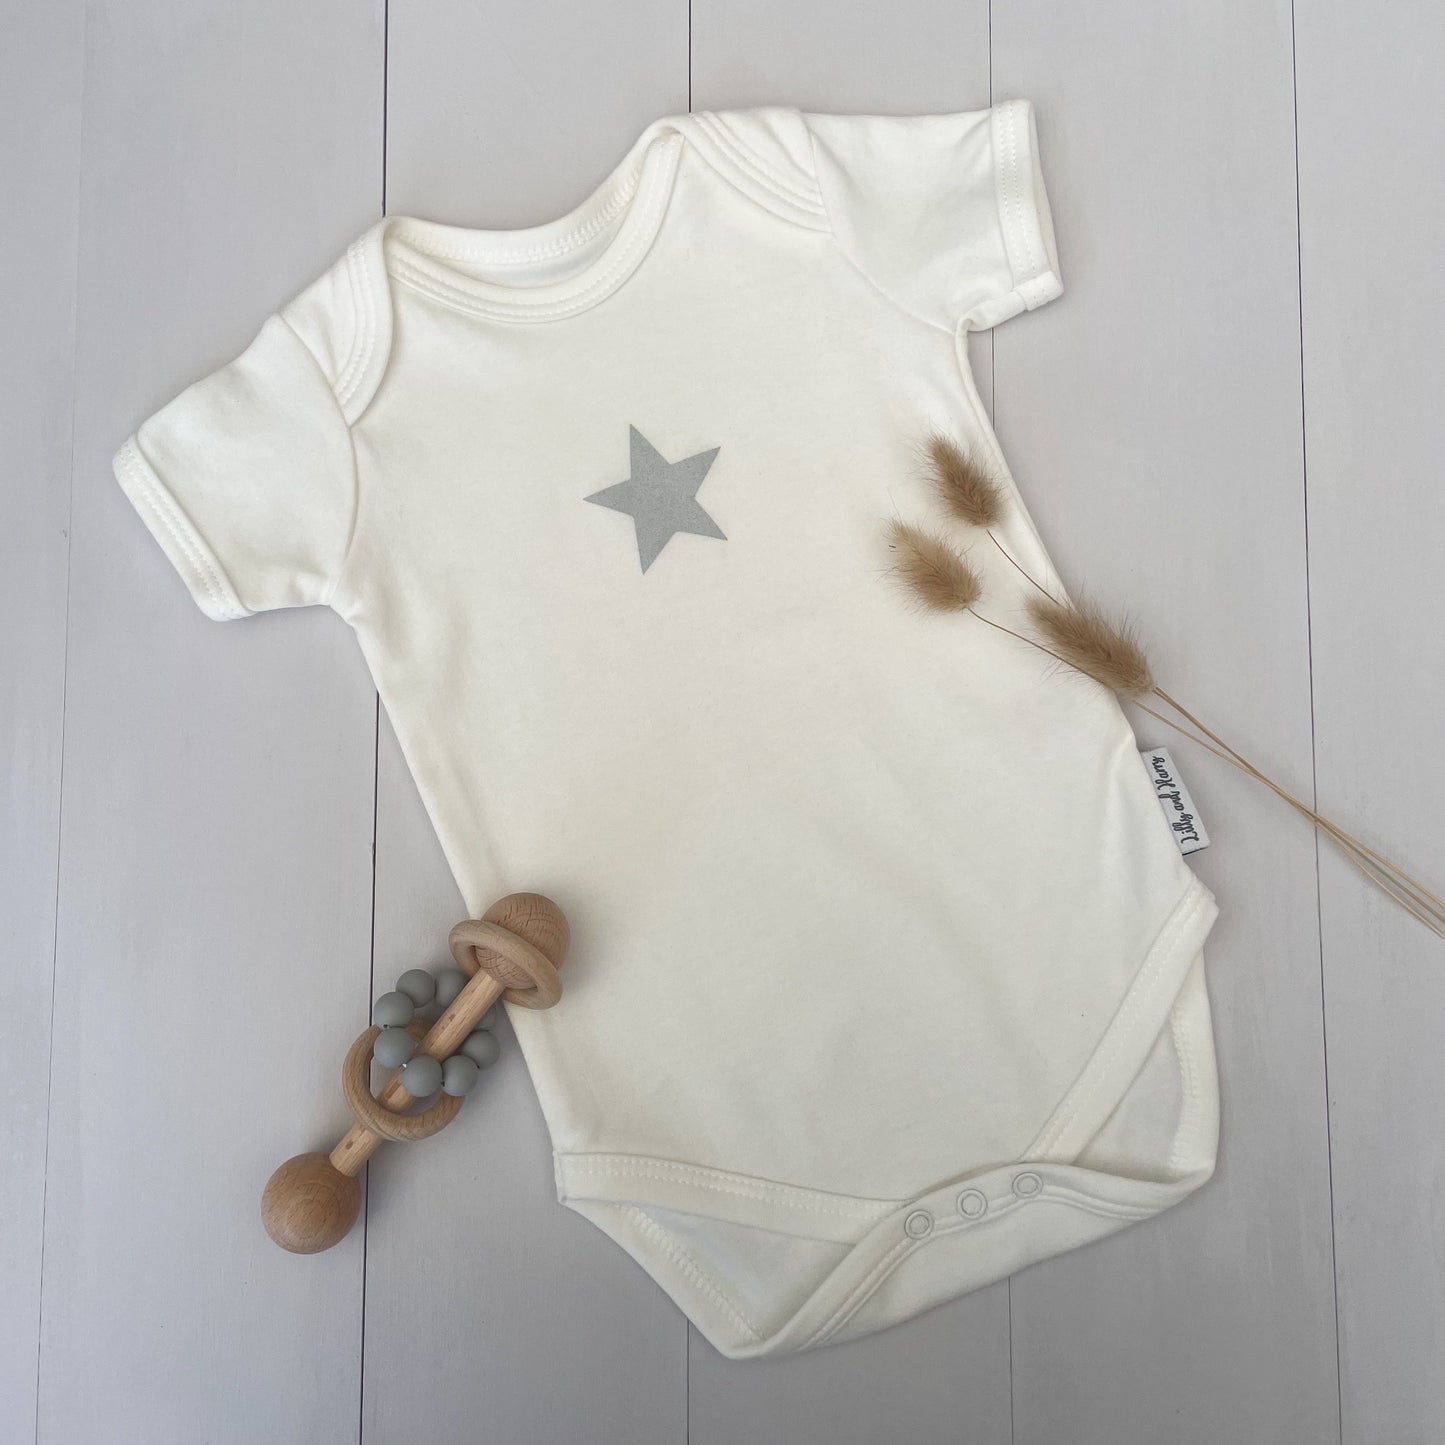 single star milk white baby grow for new borns - super soft baby romper. baby shower gift. 